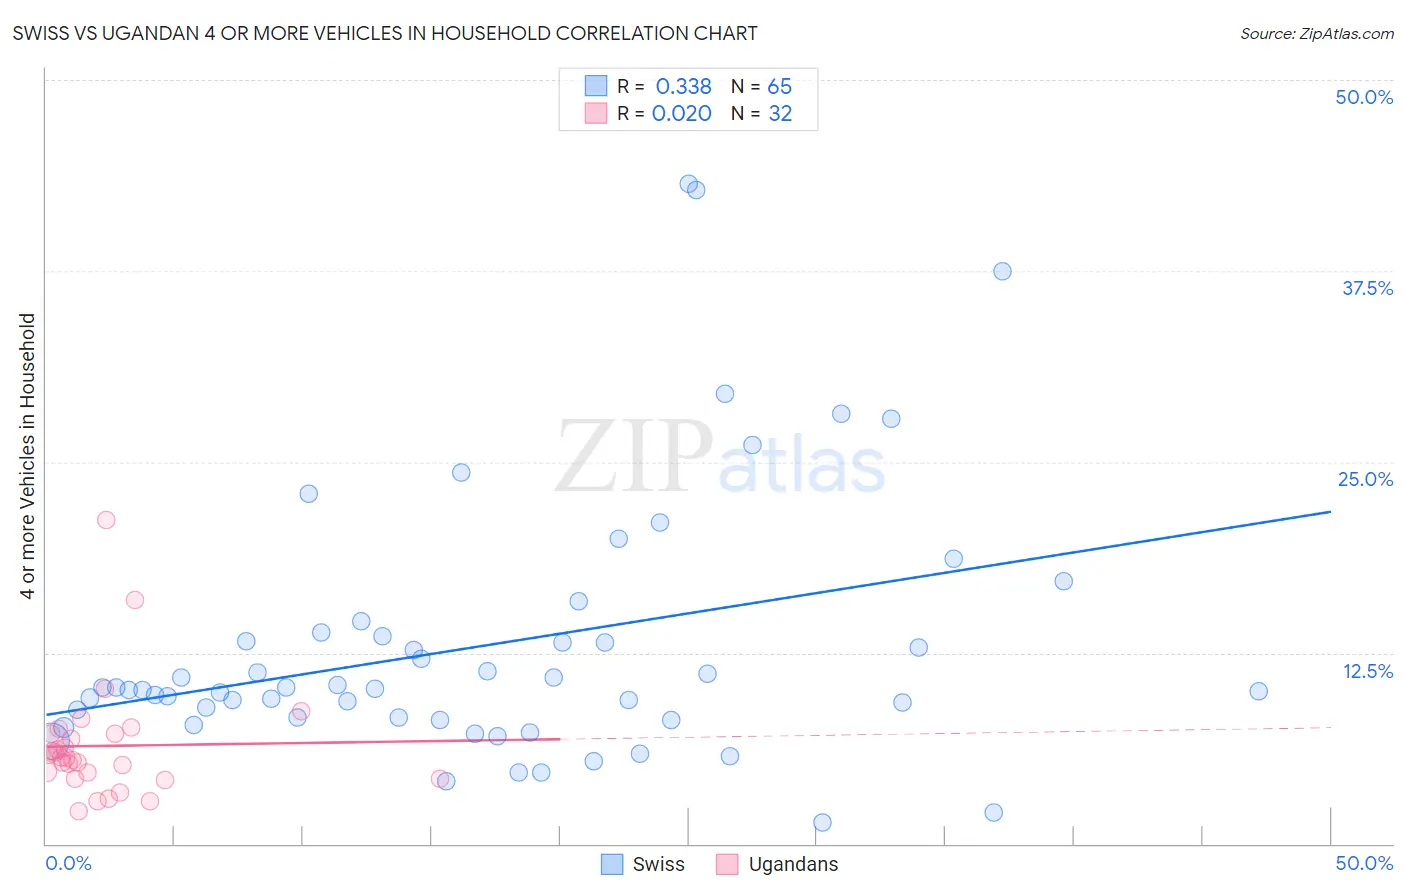 Swiss vs Ugandan 4 or more Vehicles in Household